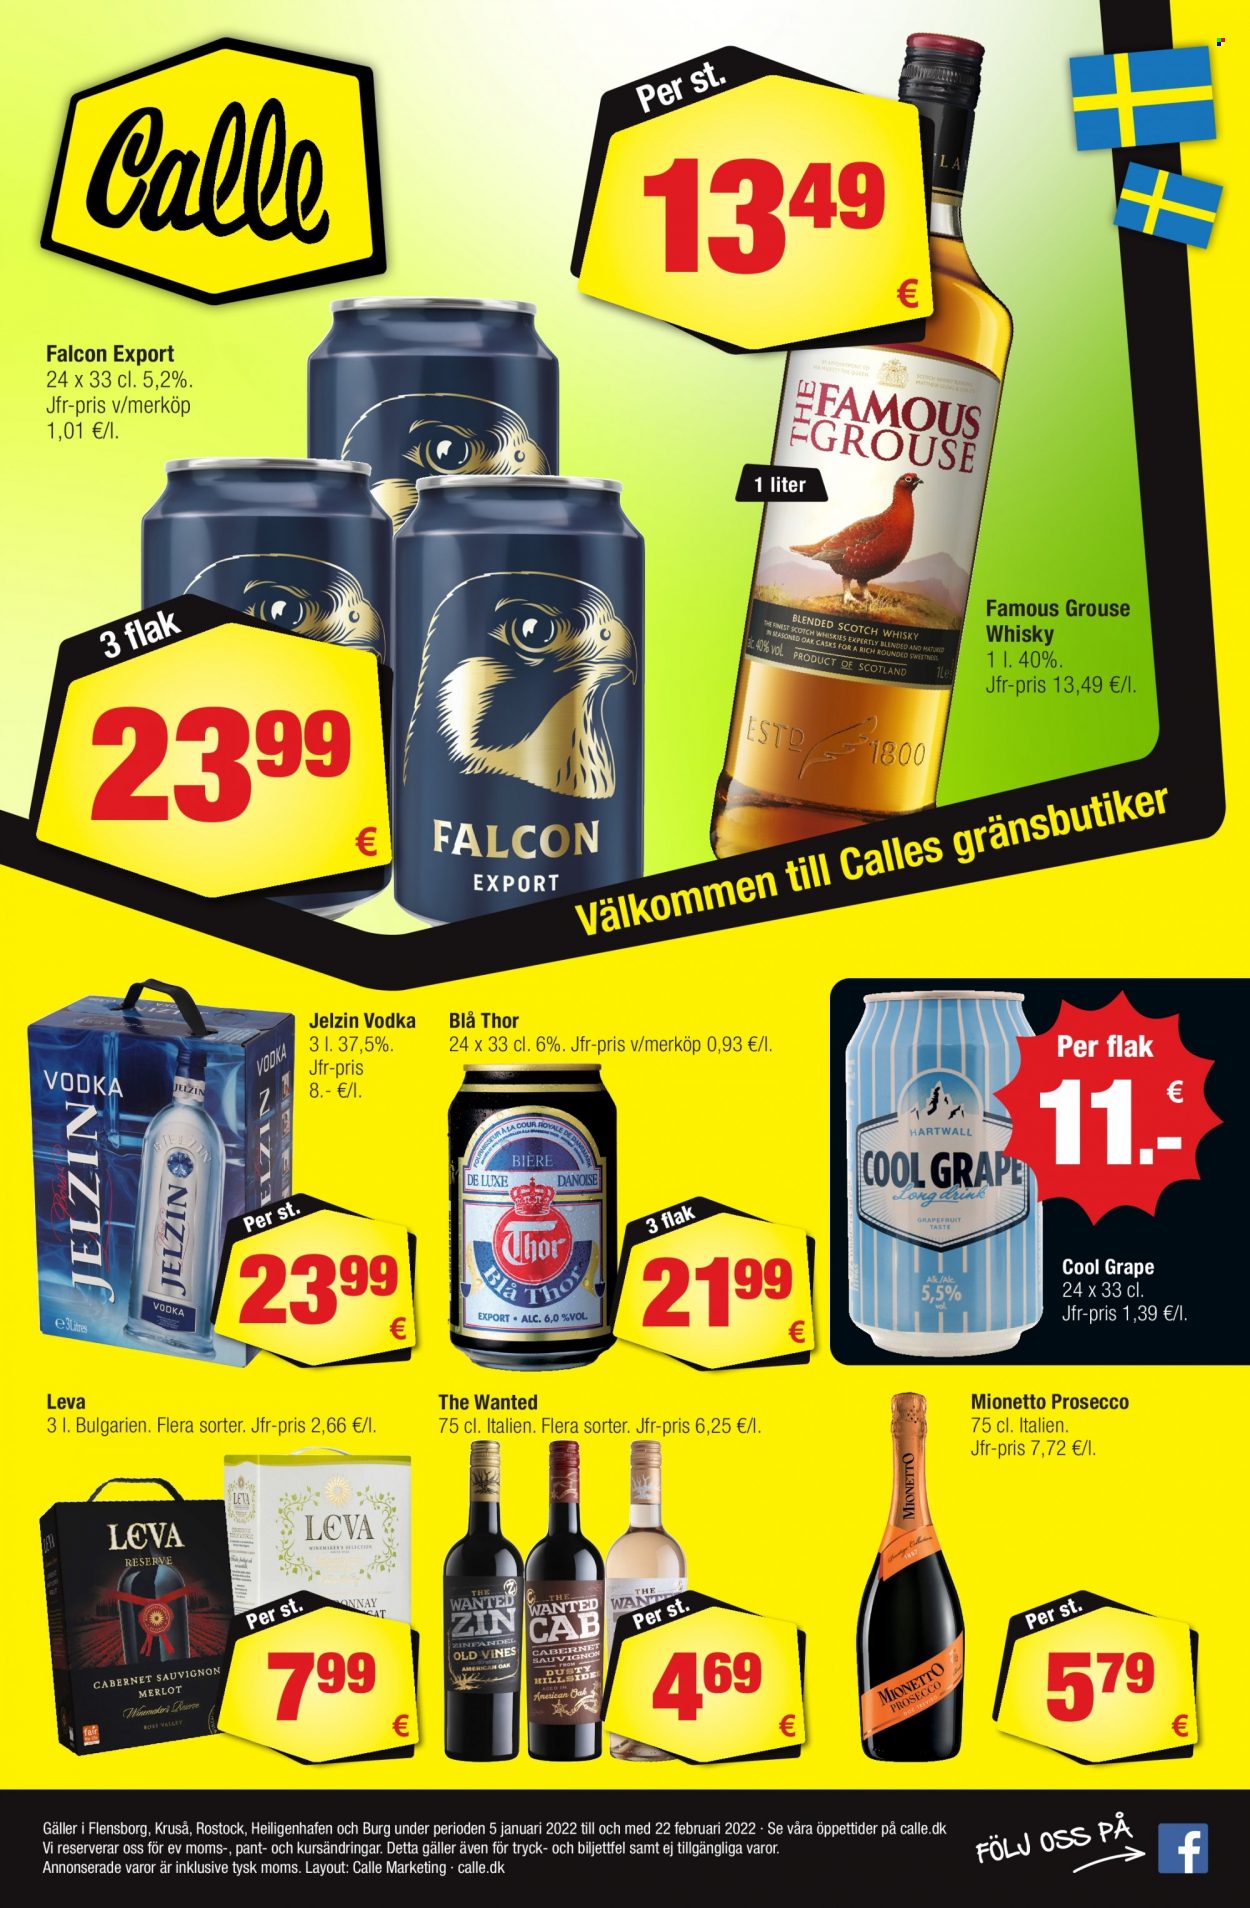 Calle reklamblad - 5/1 2022 - 22/2 2022 - varor från reklamblad - whisky, cool grape, Famous Grouse, prosecco, Vodka, Jelzin. Sida 1.